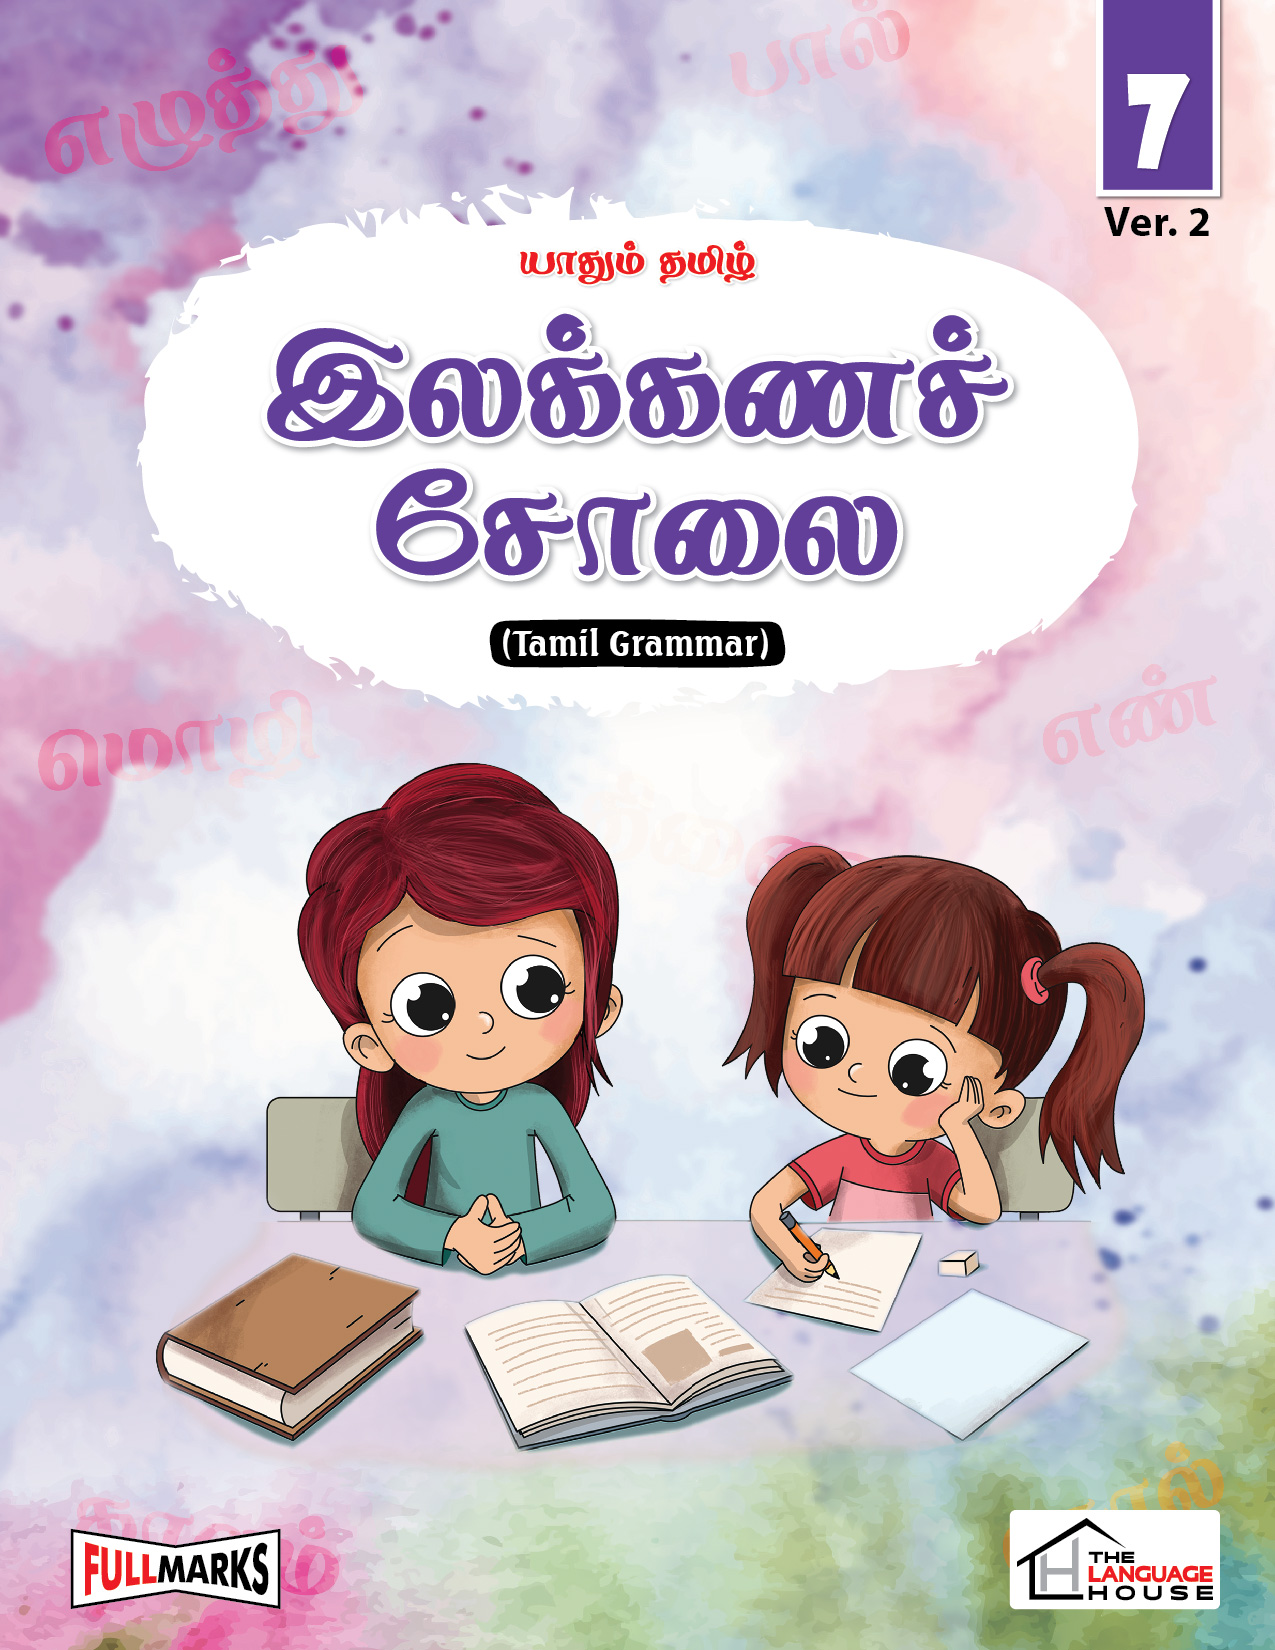 Tamil Grammar Ver. 2 Class 7